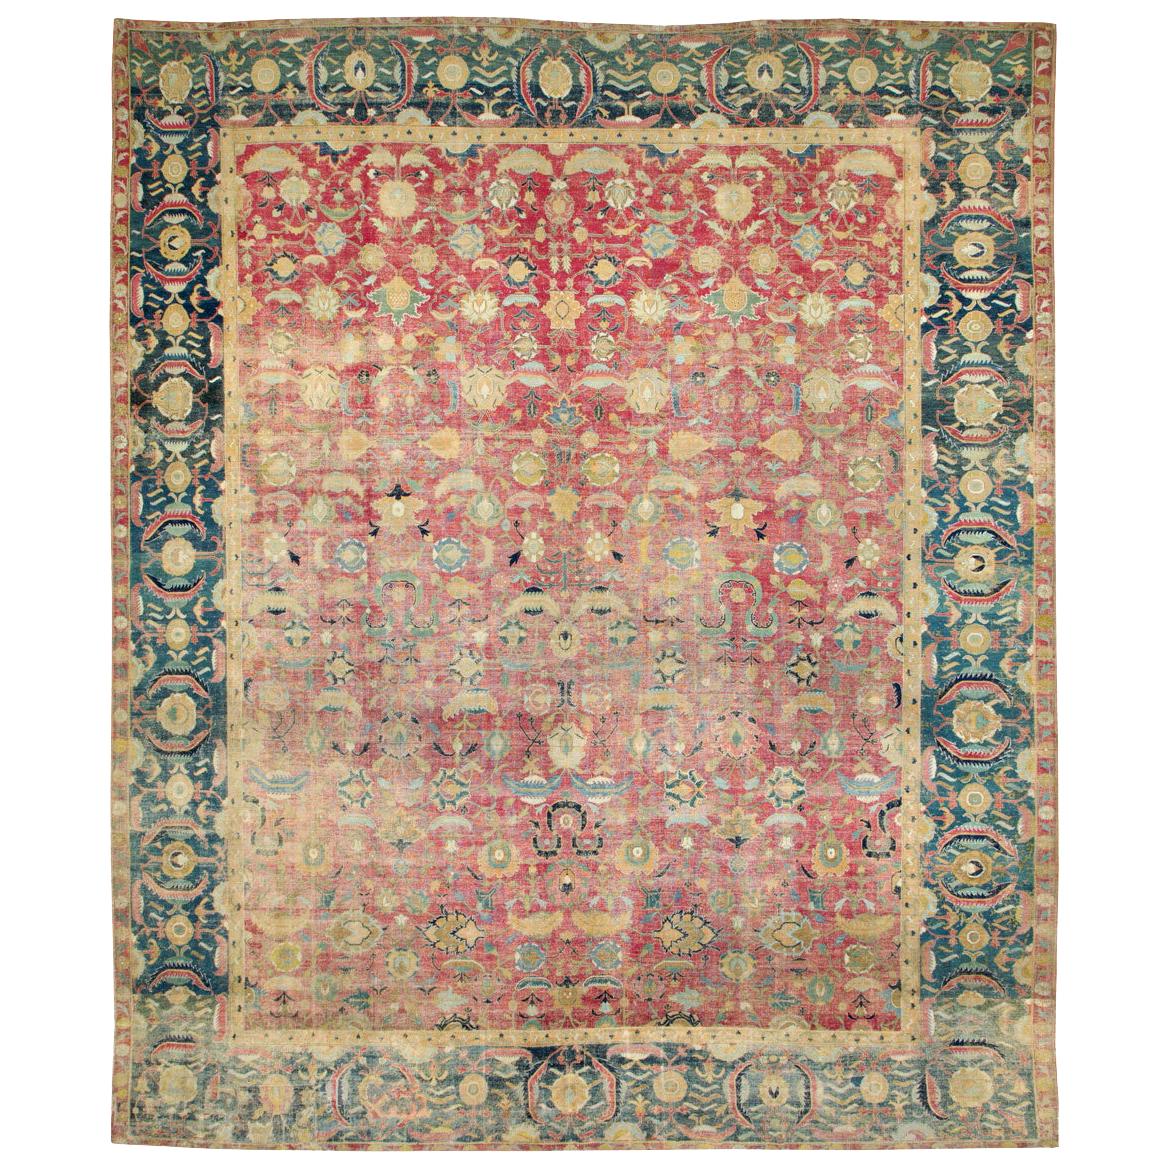 Rare 17 Century Mughal Period Persian Isfahan Large Room Size Carpet